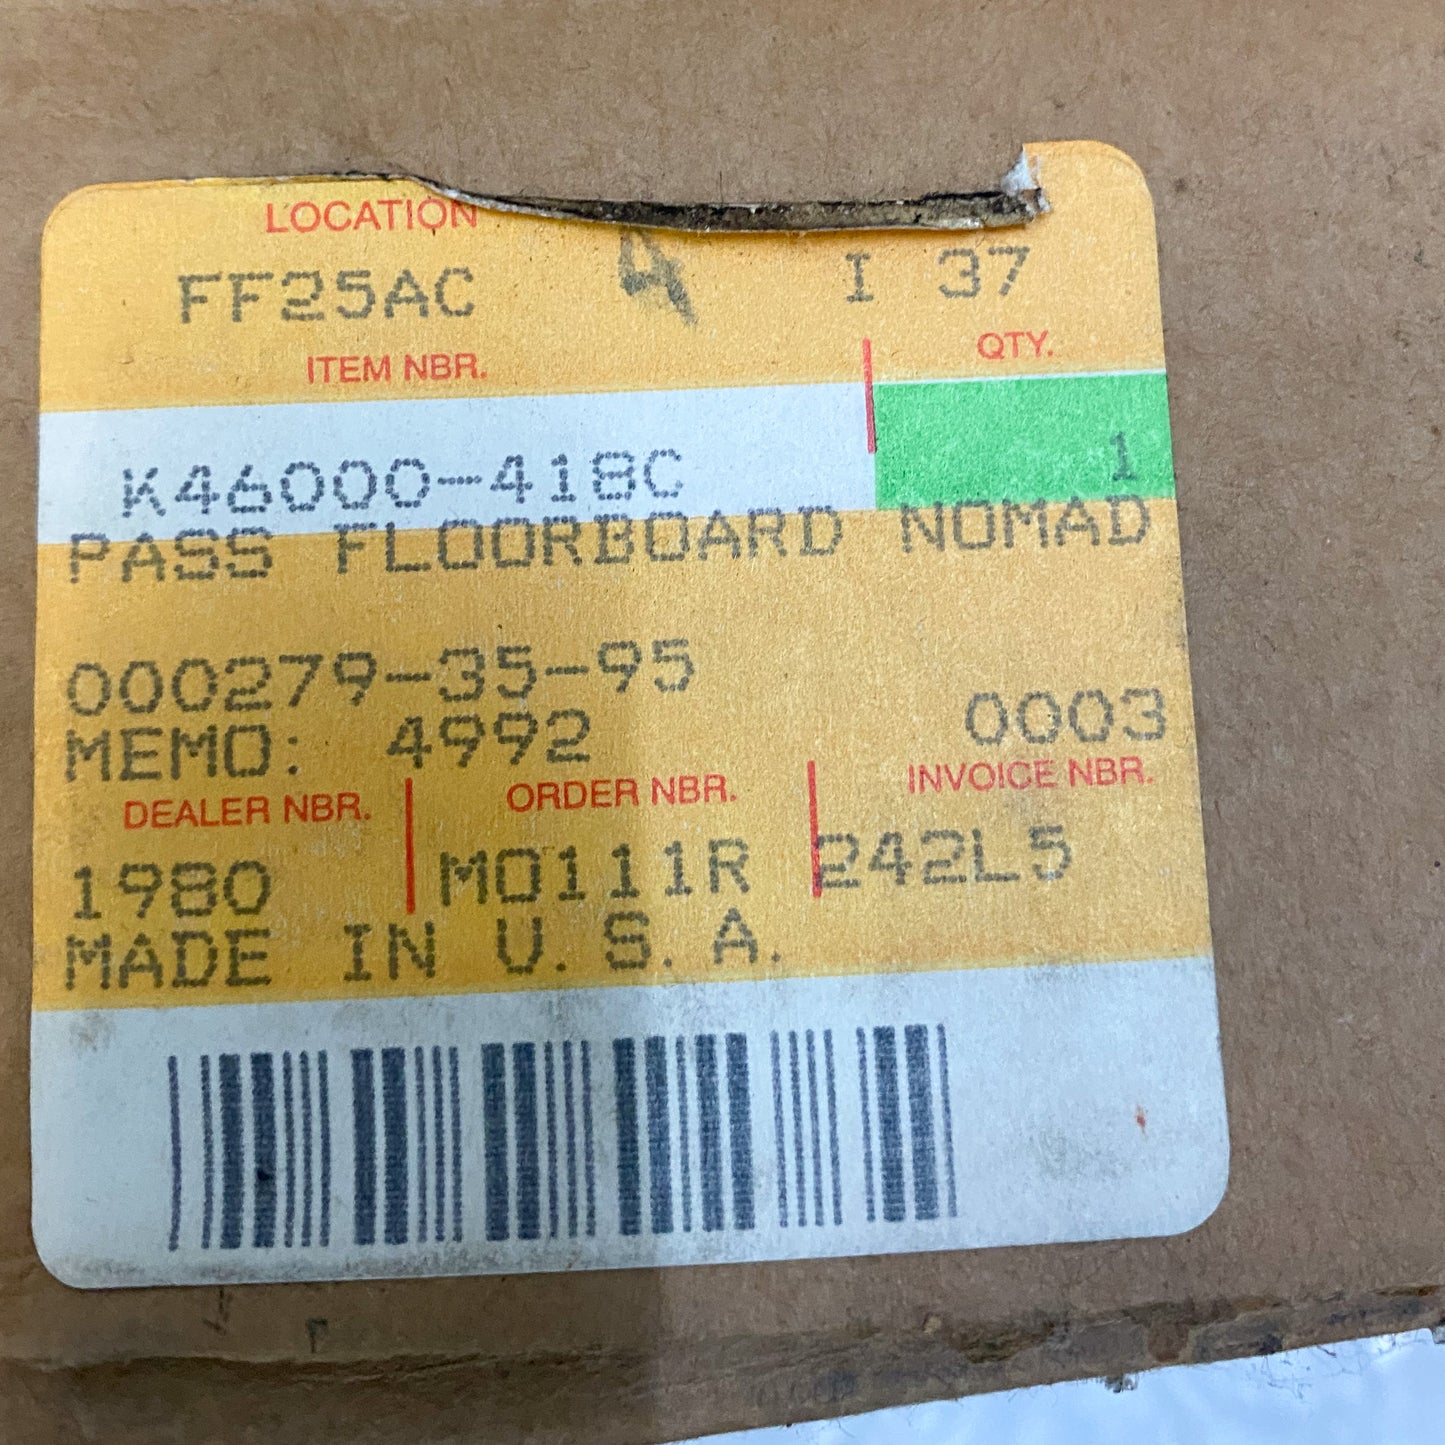 Kawasaki Passenger Floorboards Nomad K46000-418C